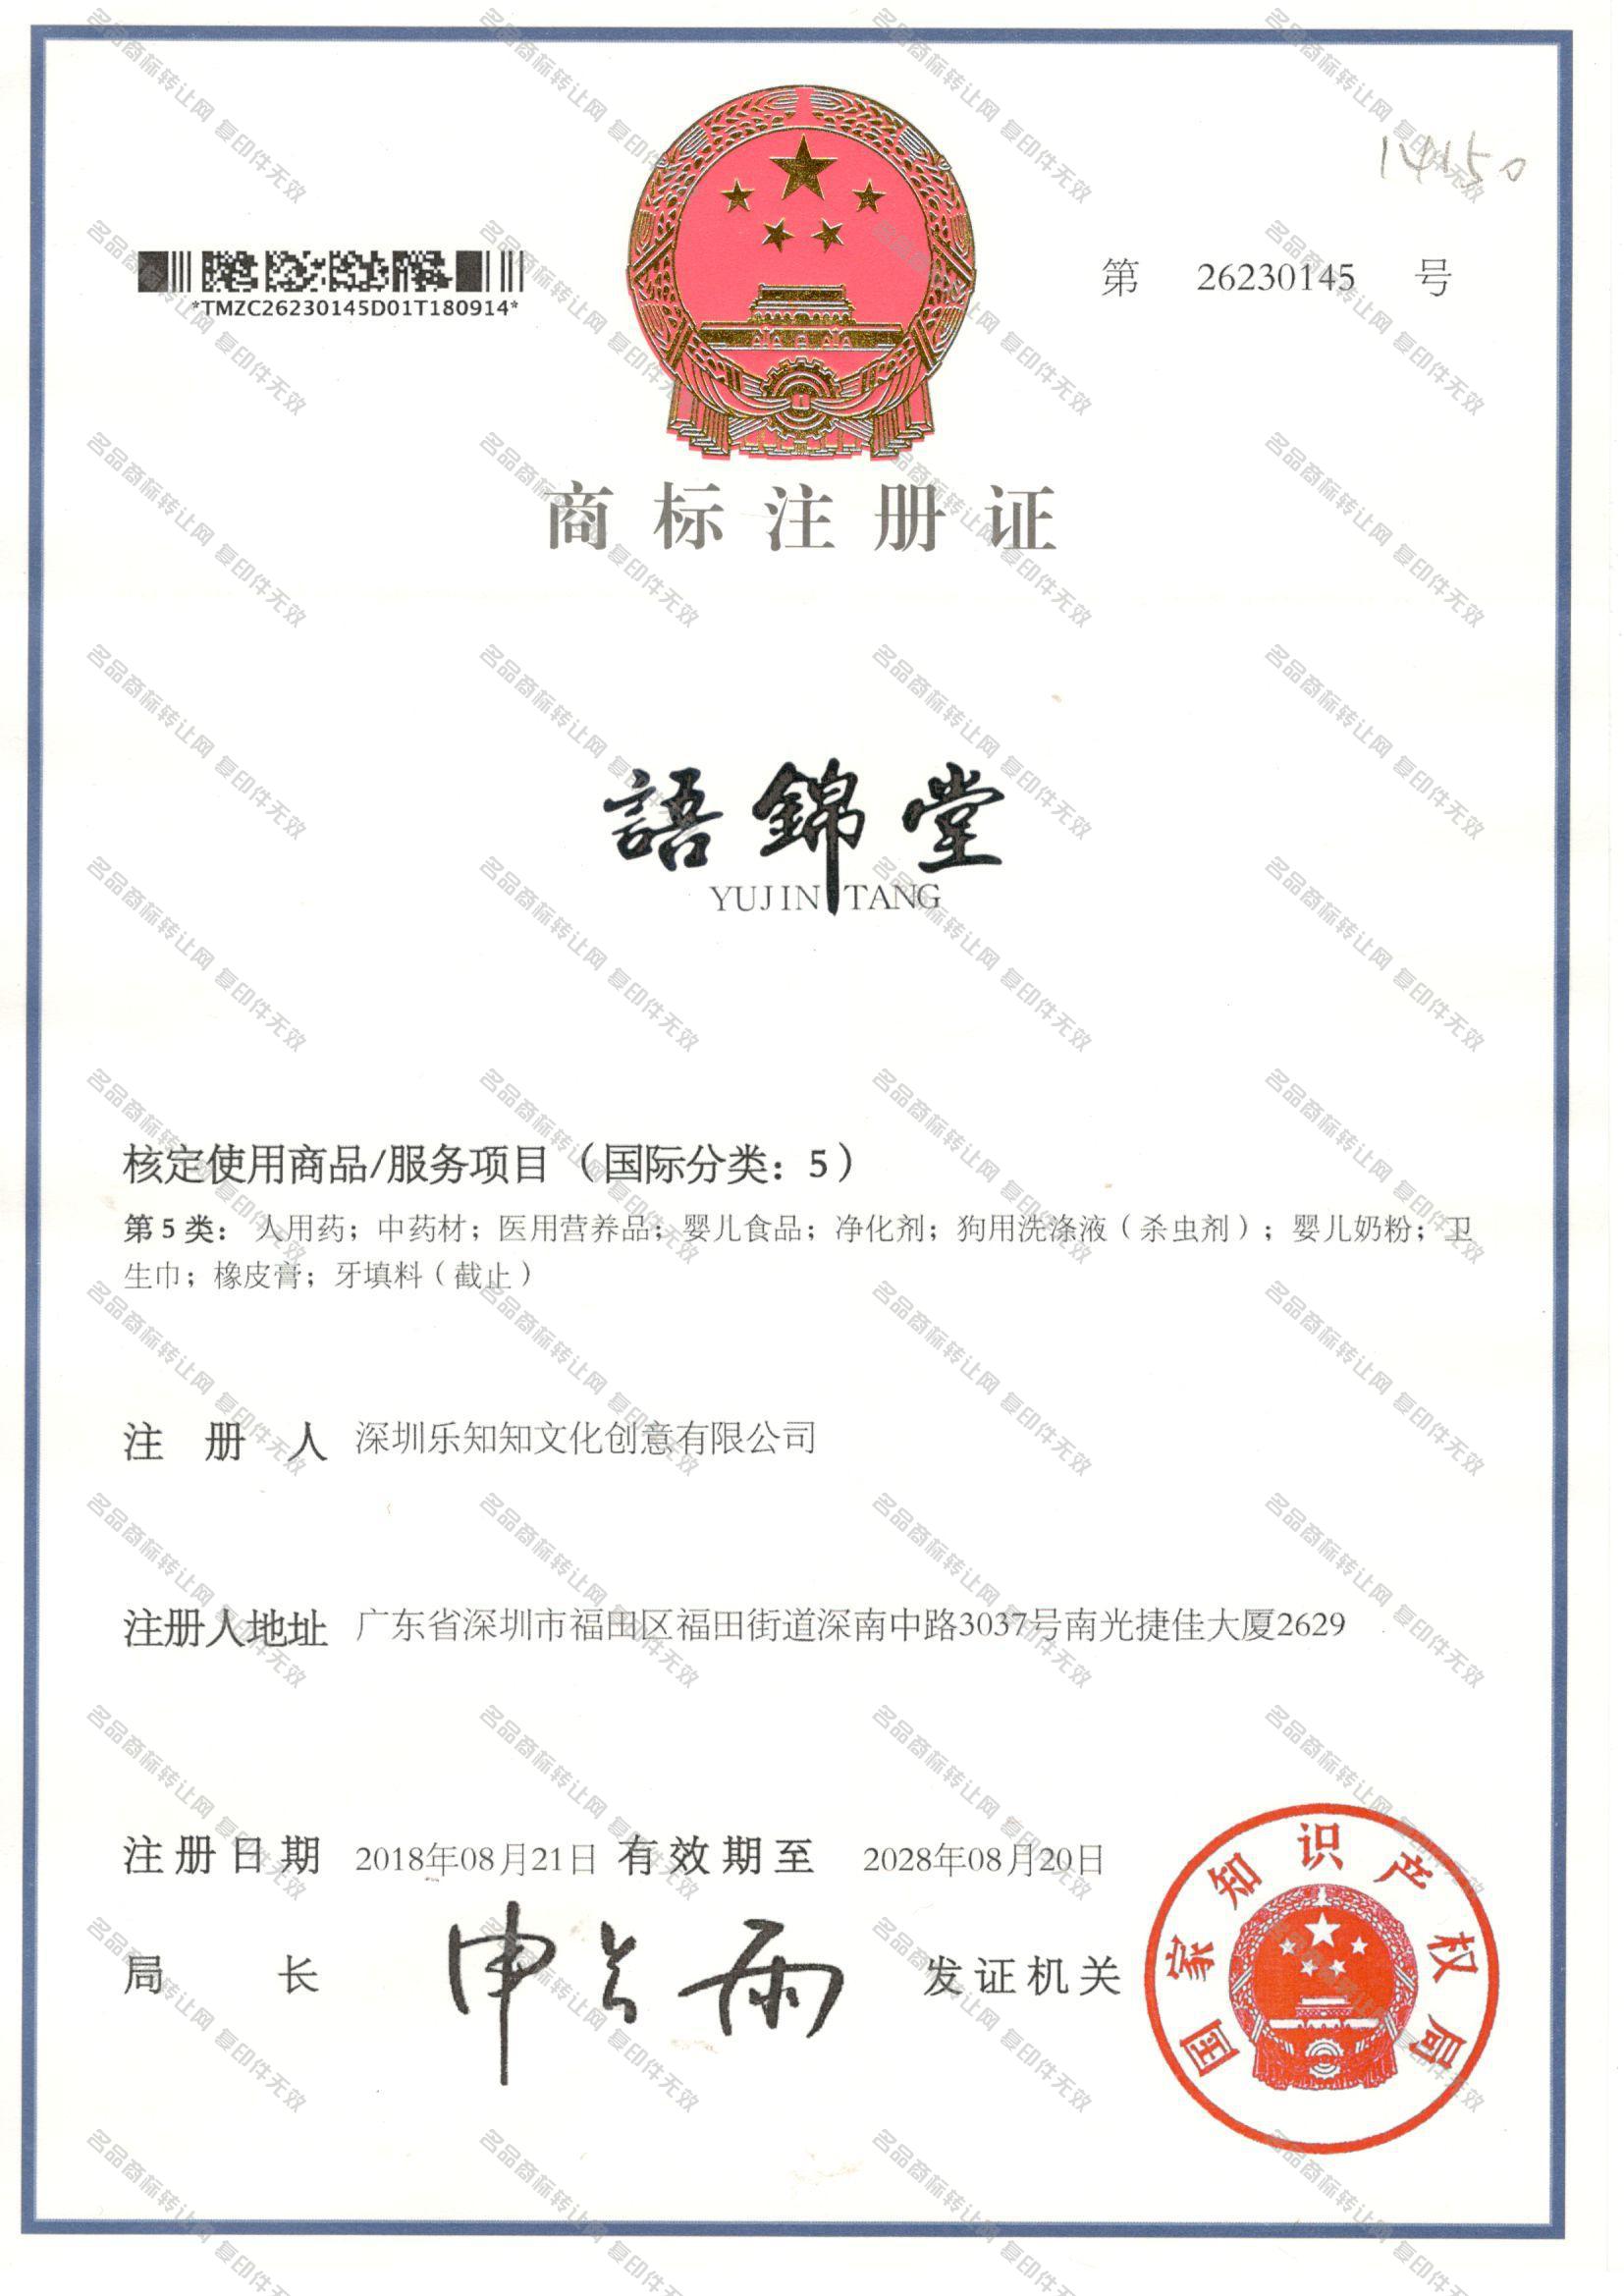 语锦堂 YUJINTANG注册证